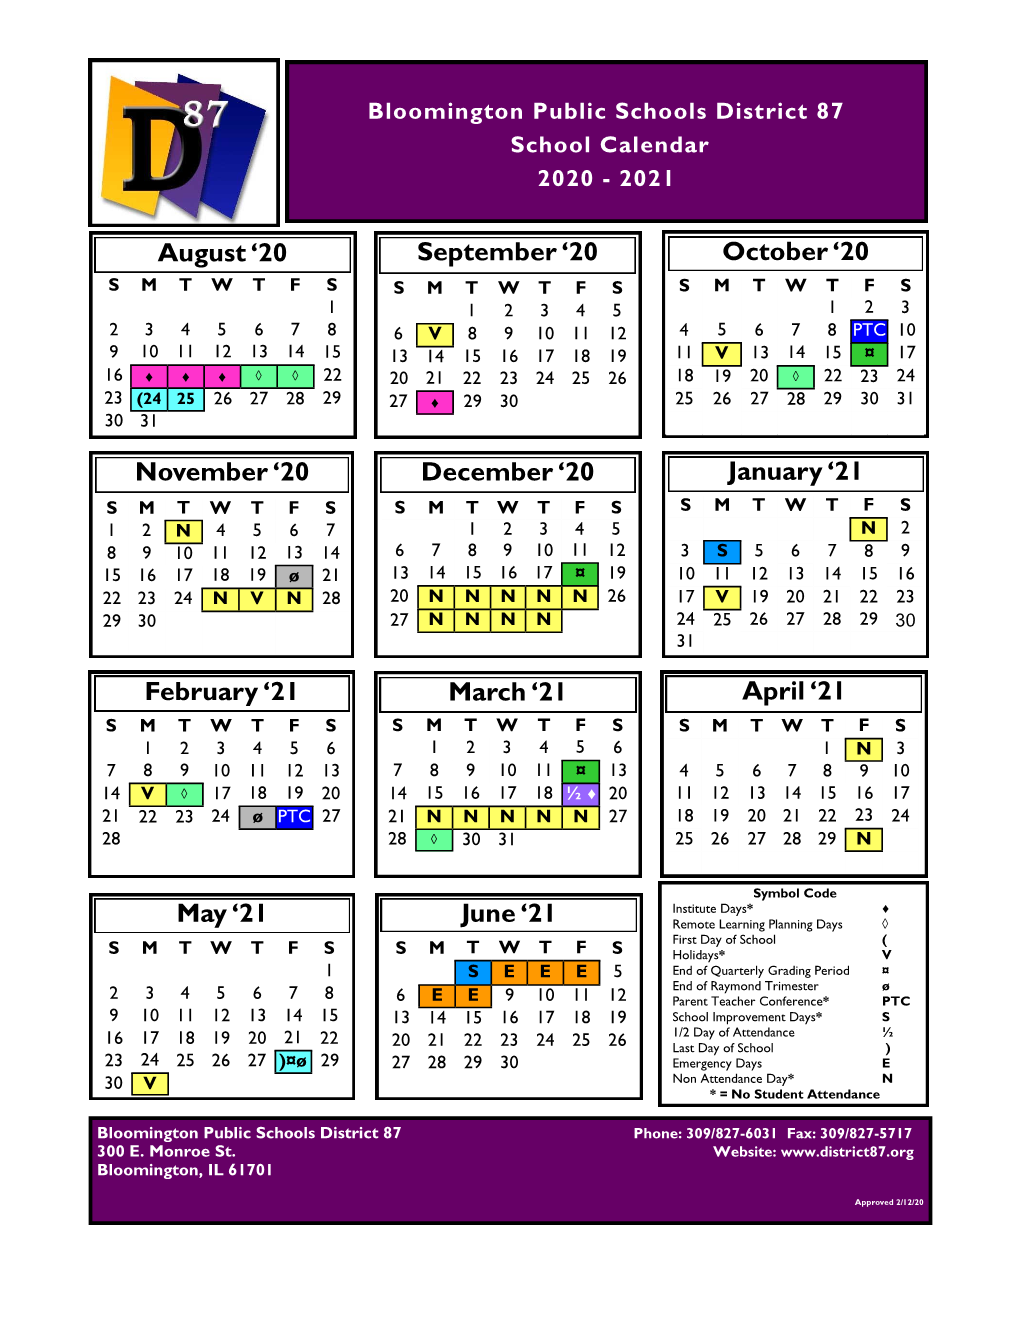 Bloomington Public Schools District 87 School Calendar 2020 - 2021